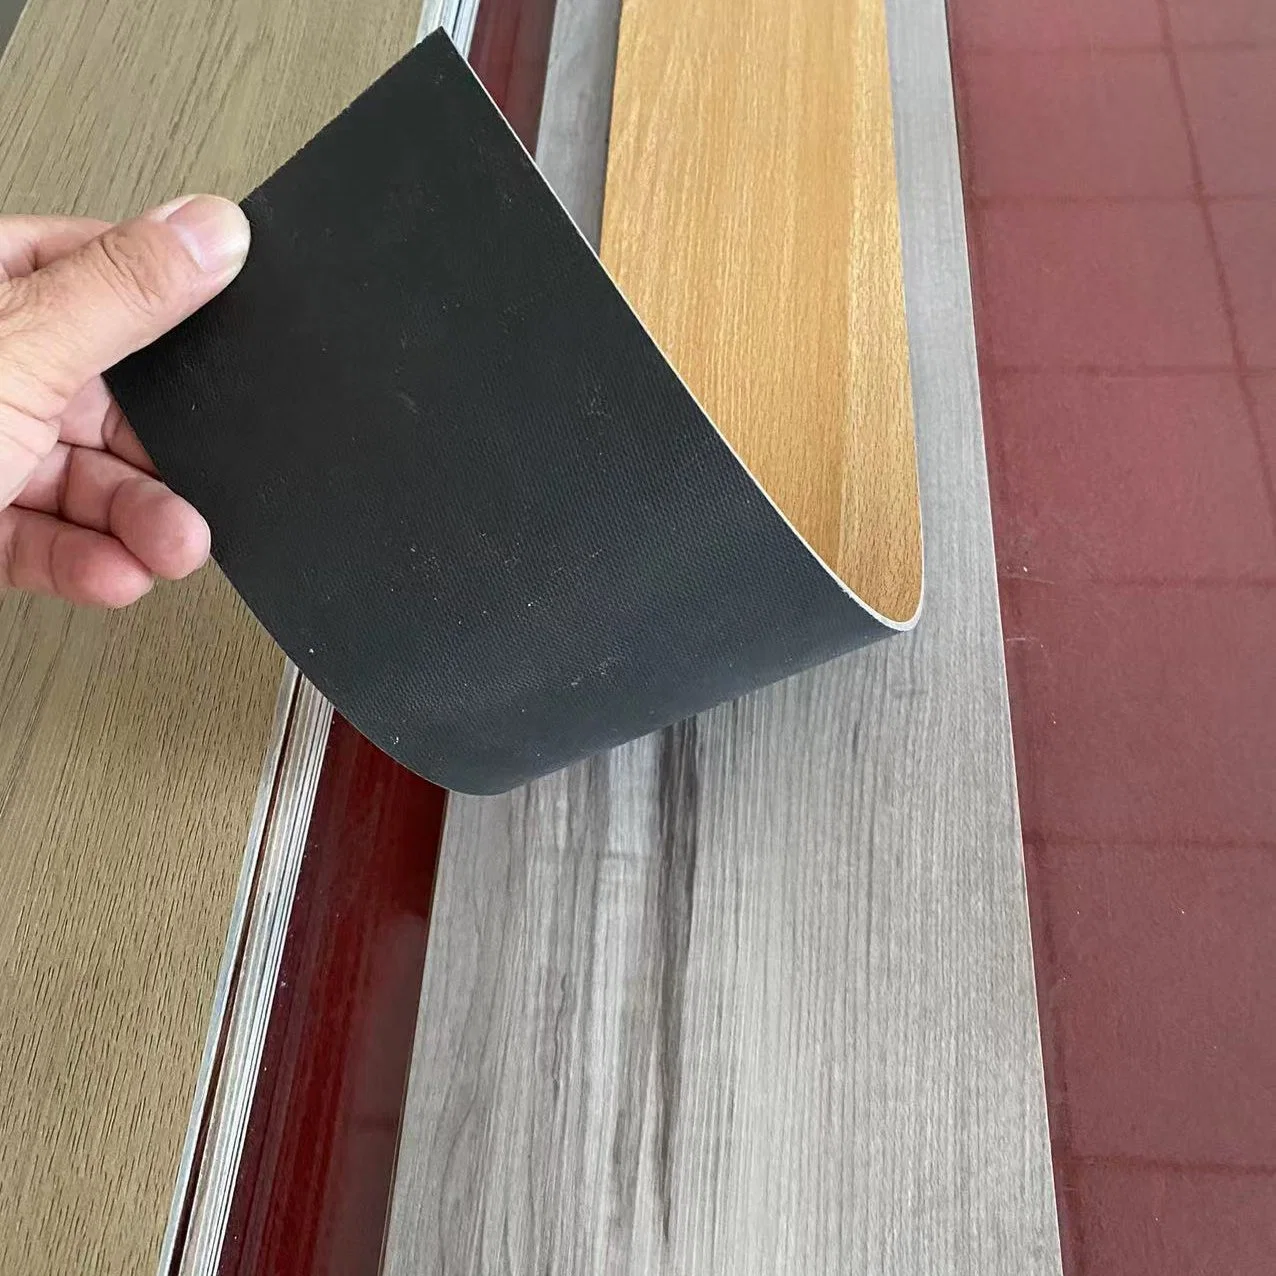 LVT suave Piso plástico grano de madera PVC Piso Residencial Pisos de vinilo